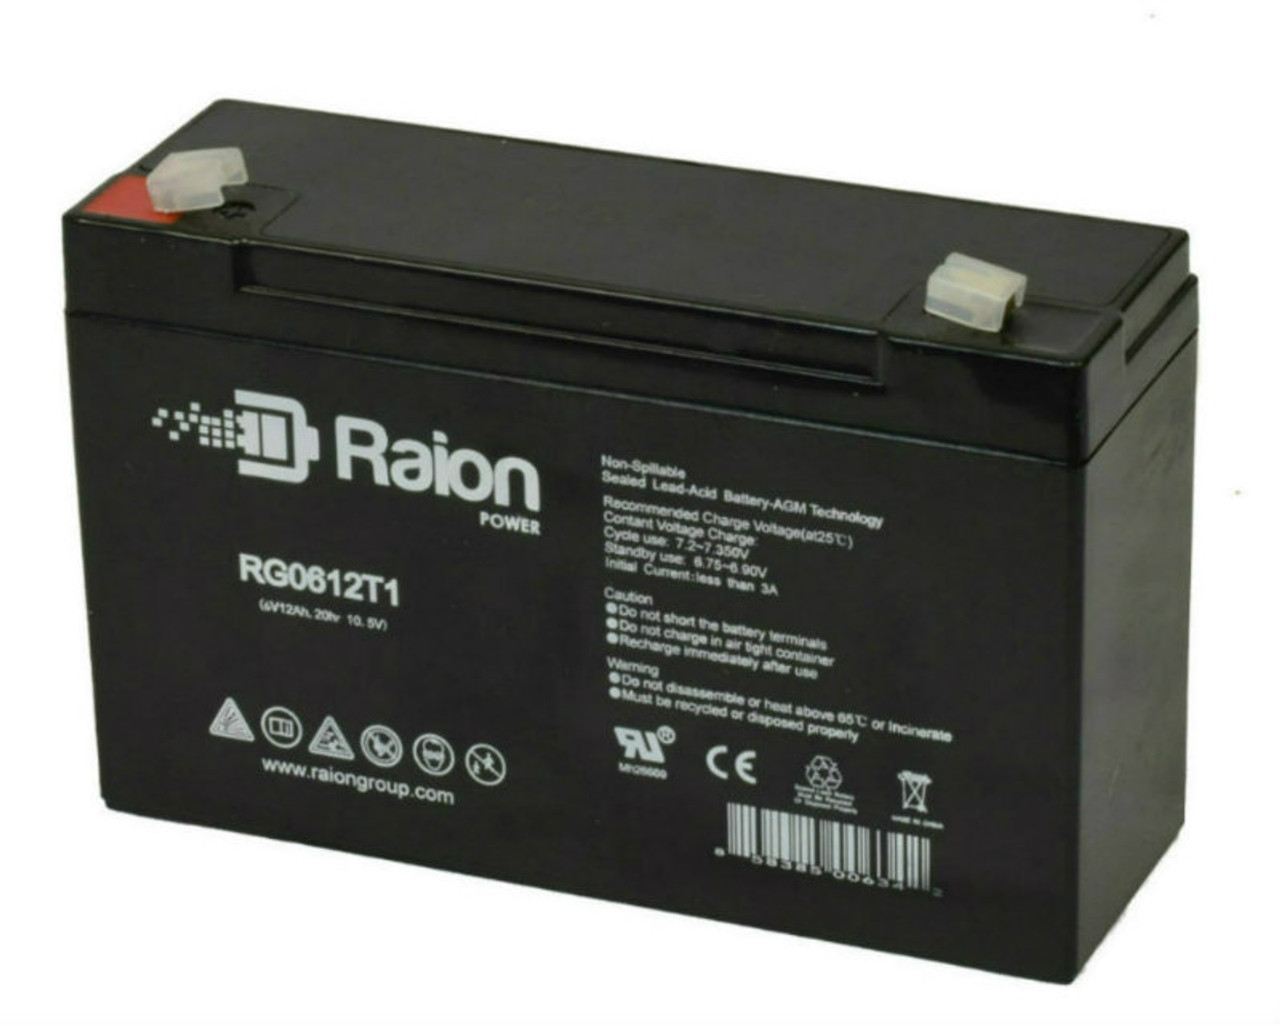 Raion Power RG06120T1 6V 12Ah Replacement UPS Battery Cartridge for Tripp Lite Smart 1400RM